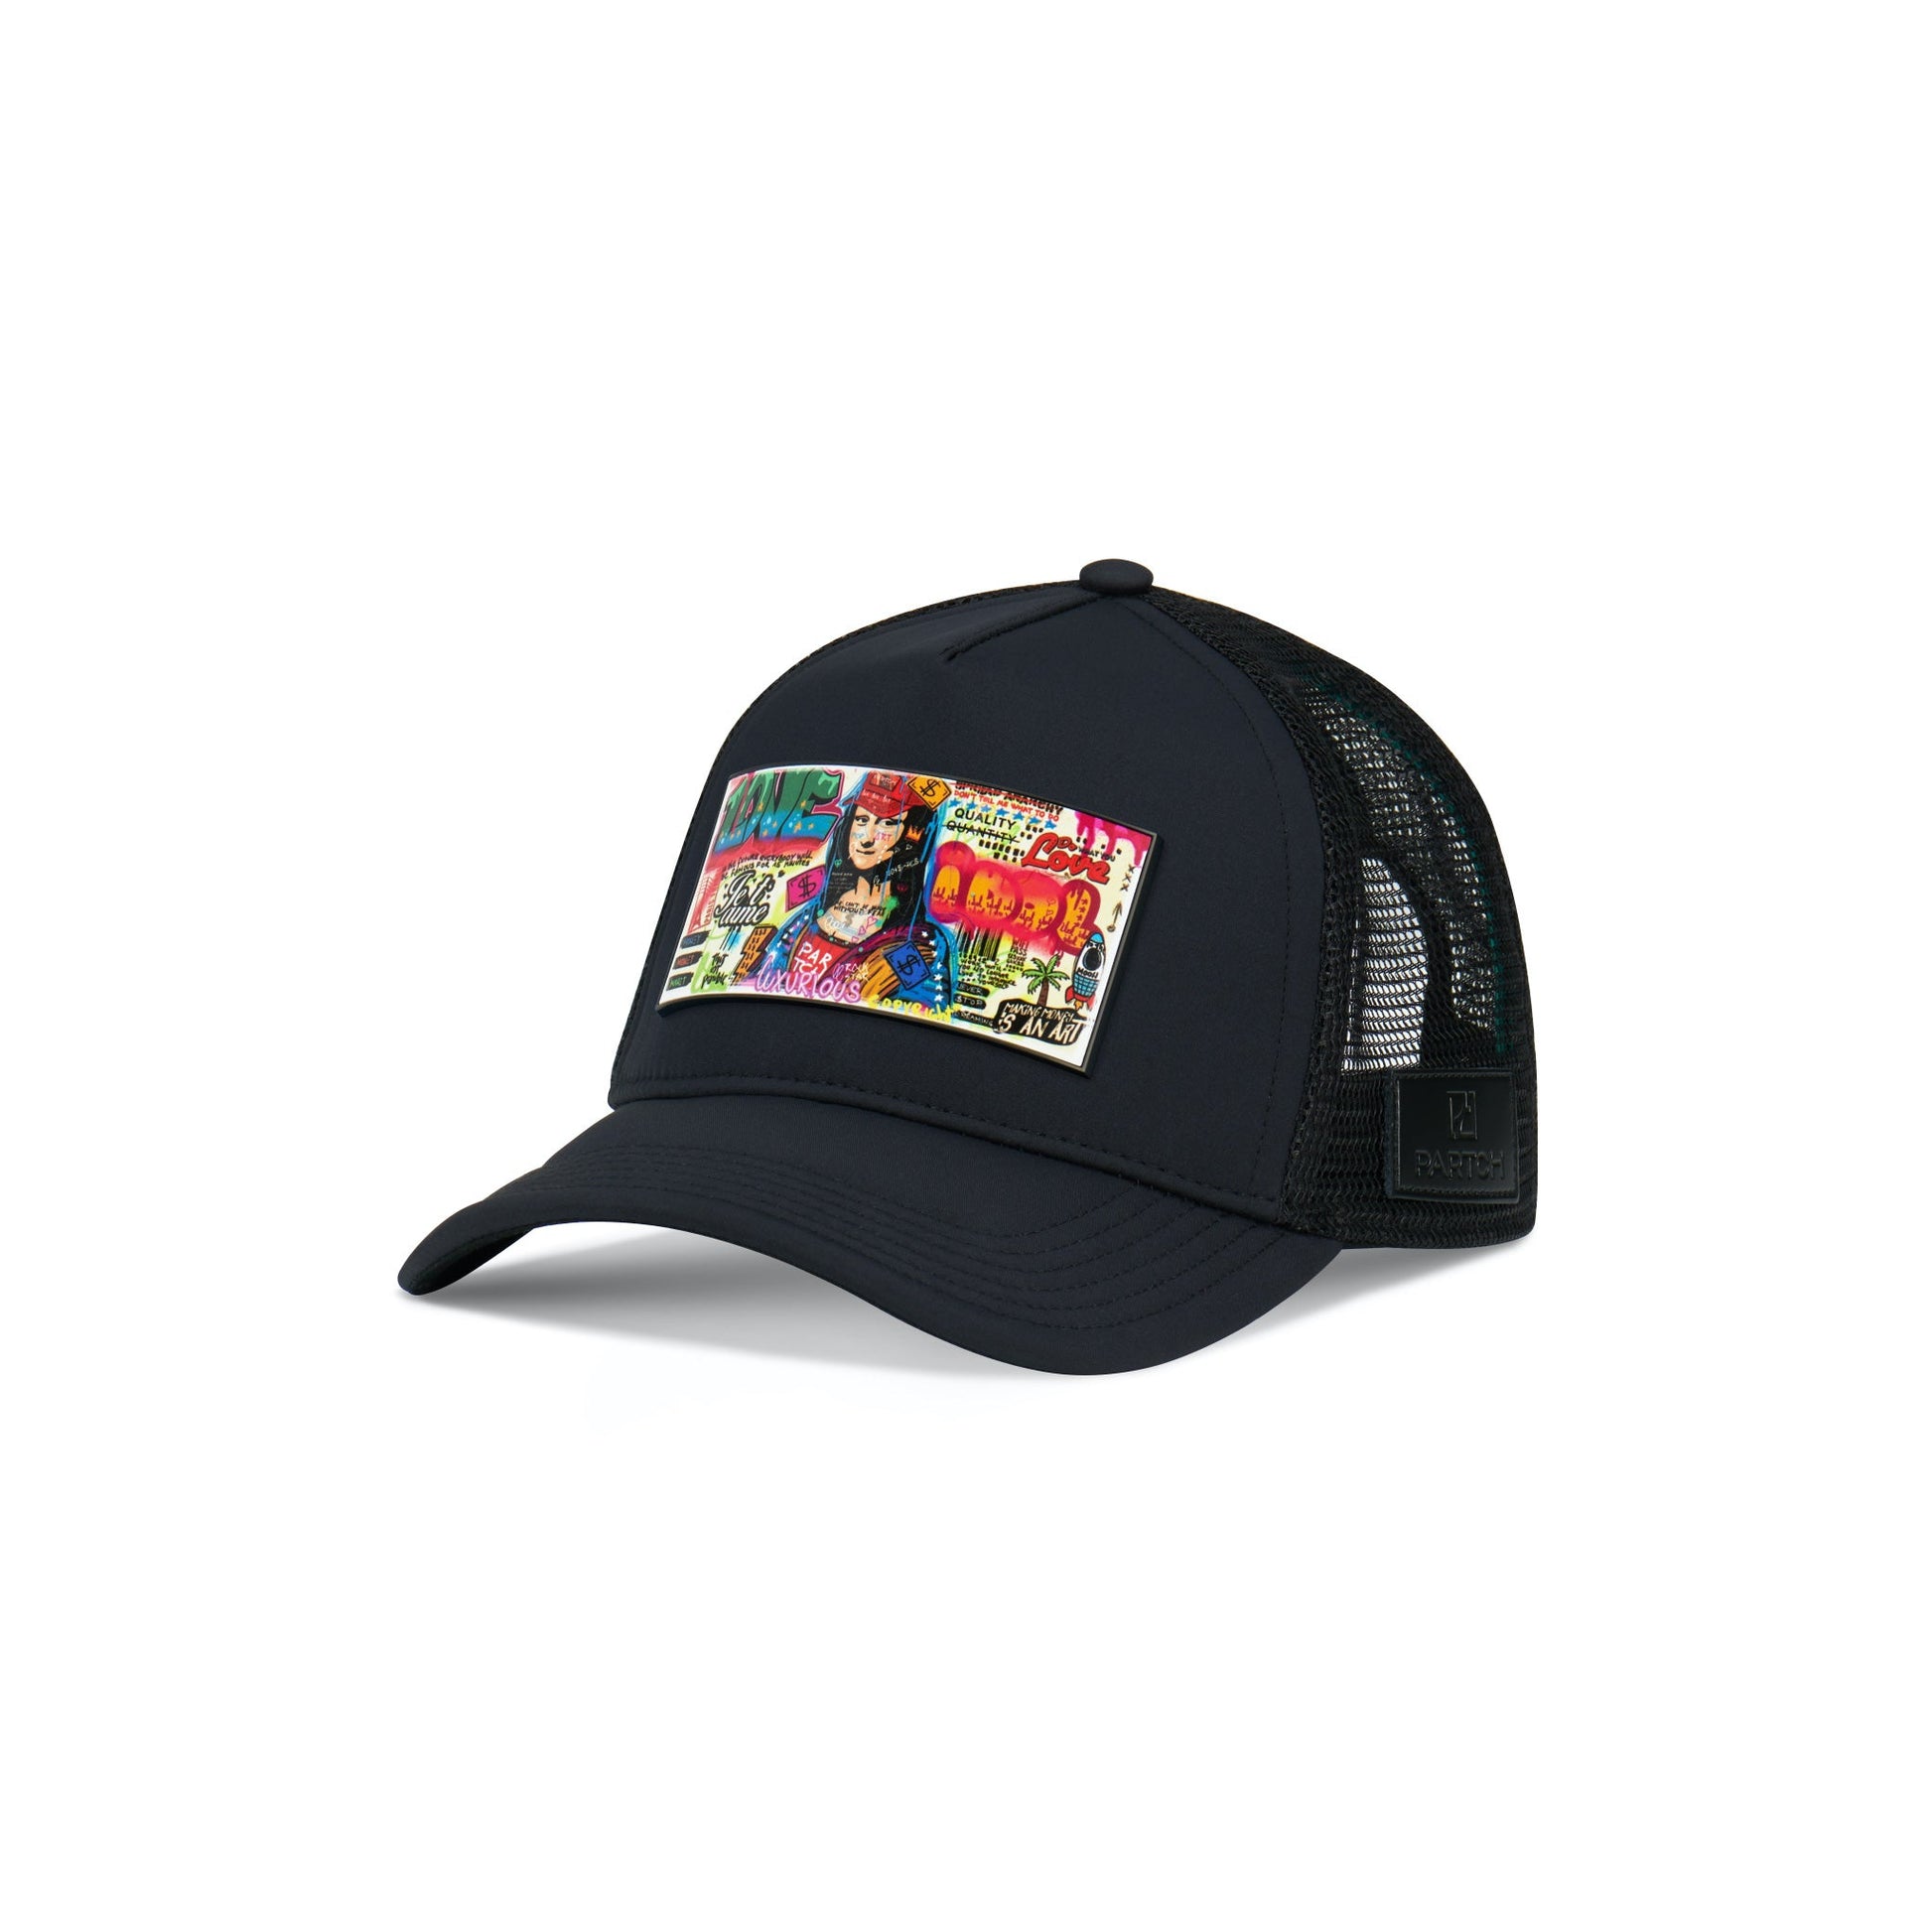 Partch Trucker Hat Black with PARTCH-Clip Mona Front View